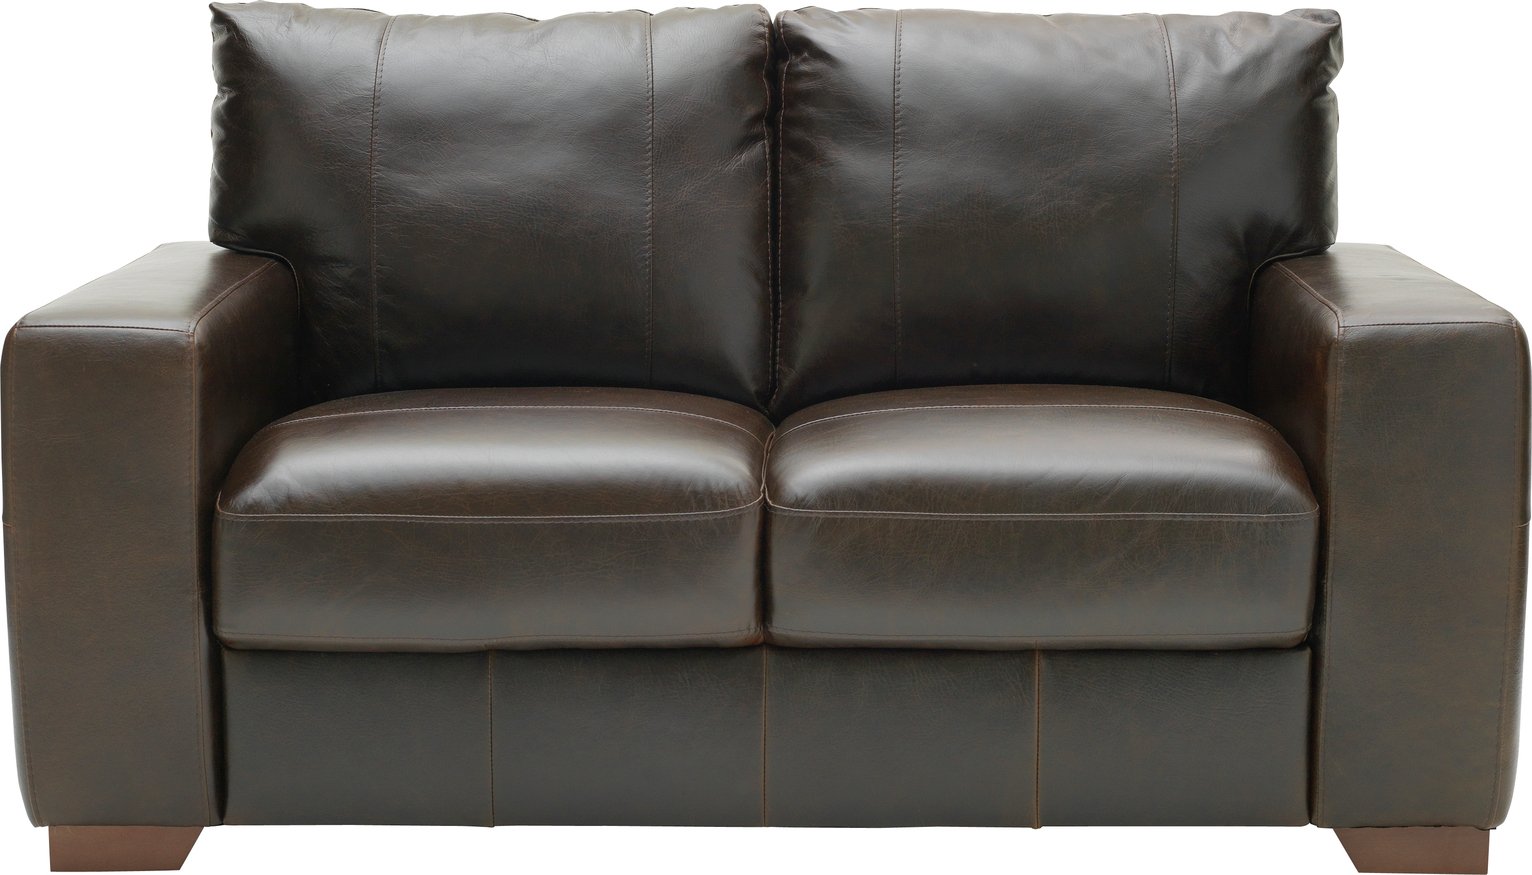 Habitat Eton 2 Seater Leather Sofa - Dark Brown